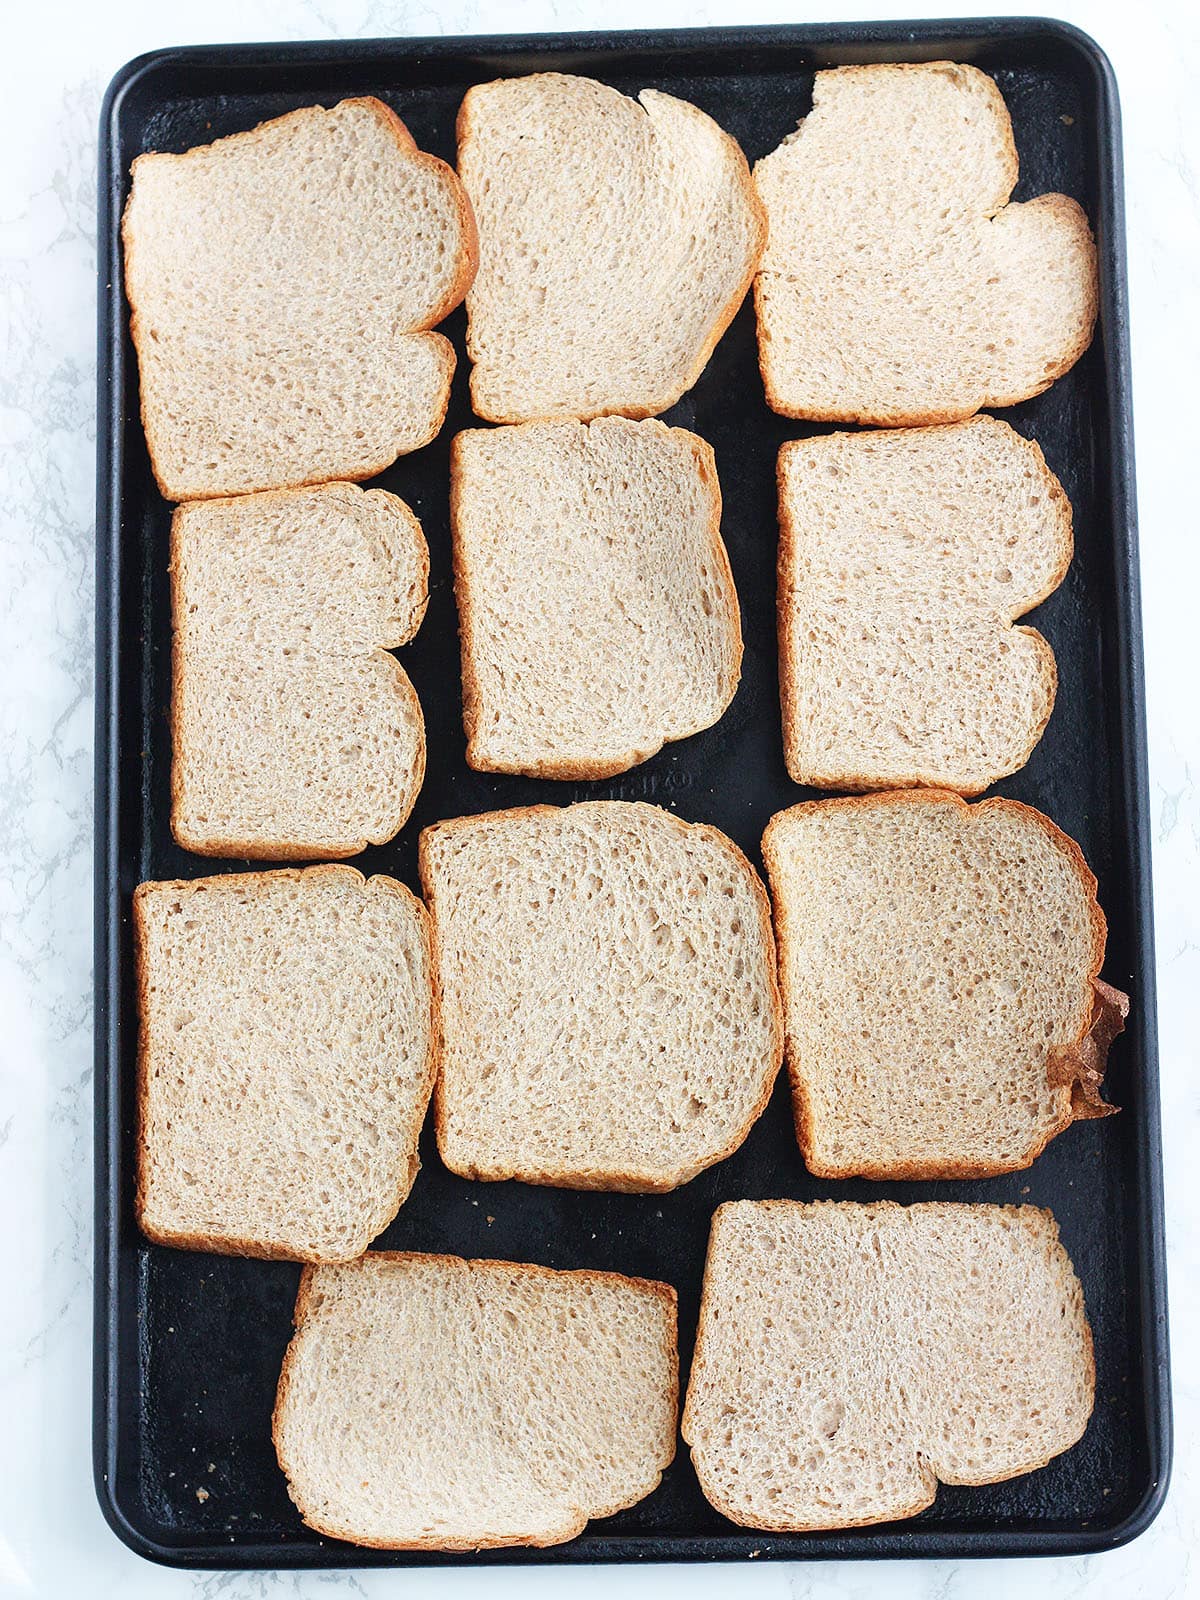 sliced of bread arranged on a baking sheet